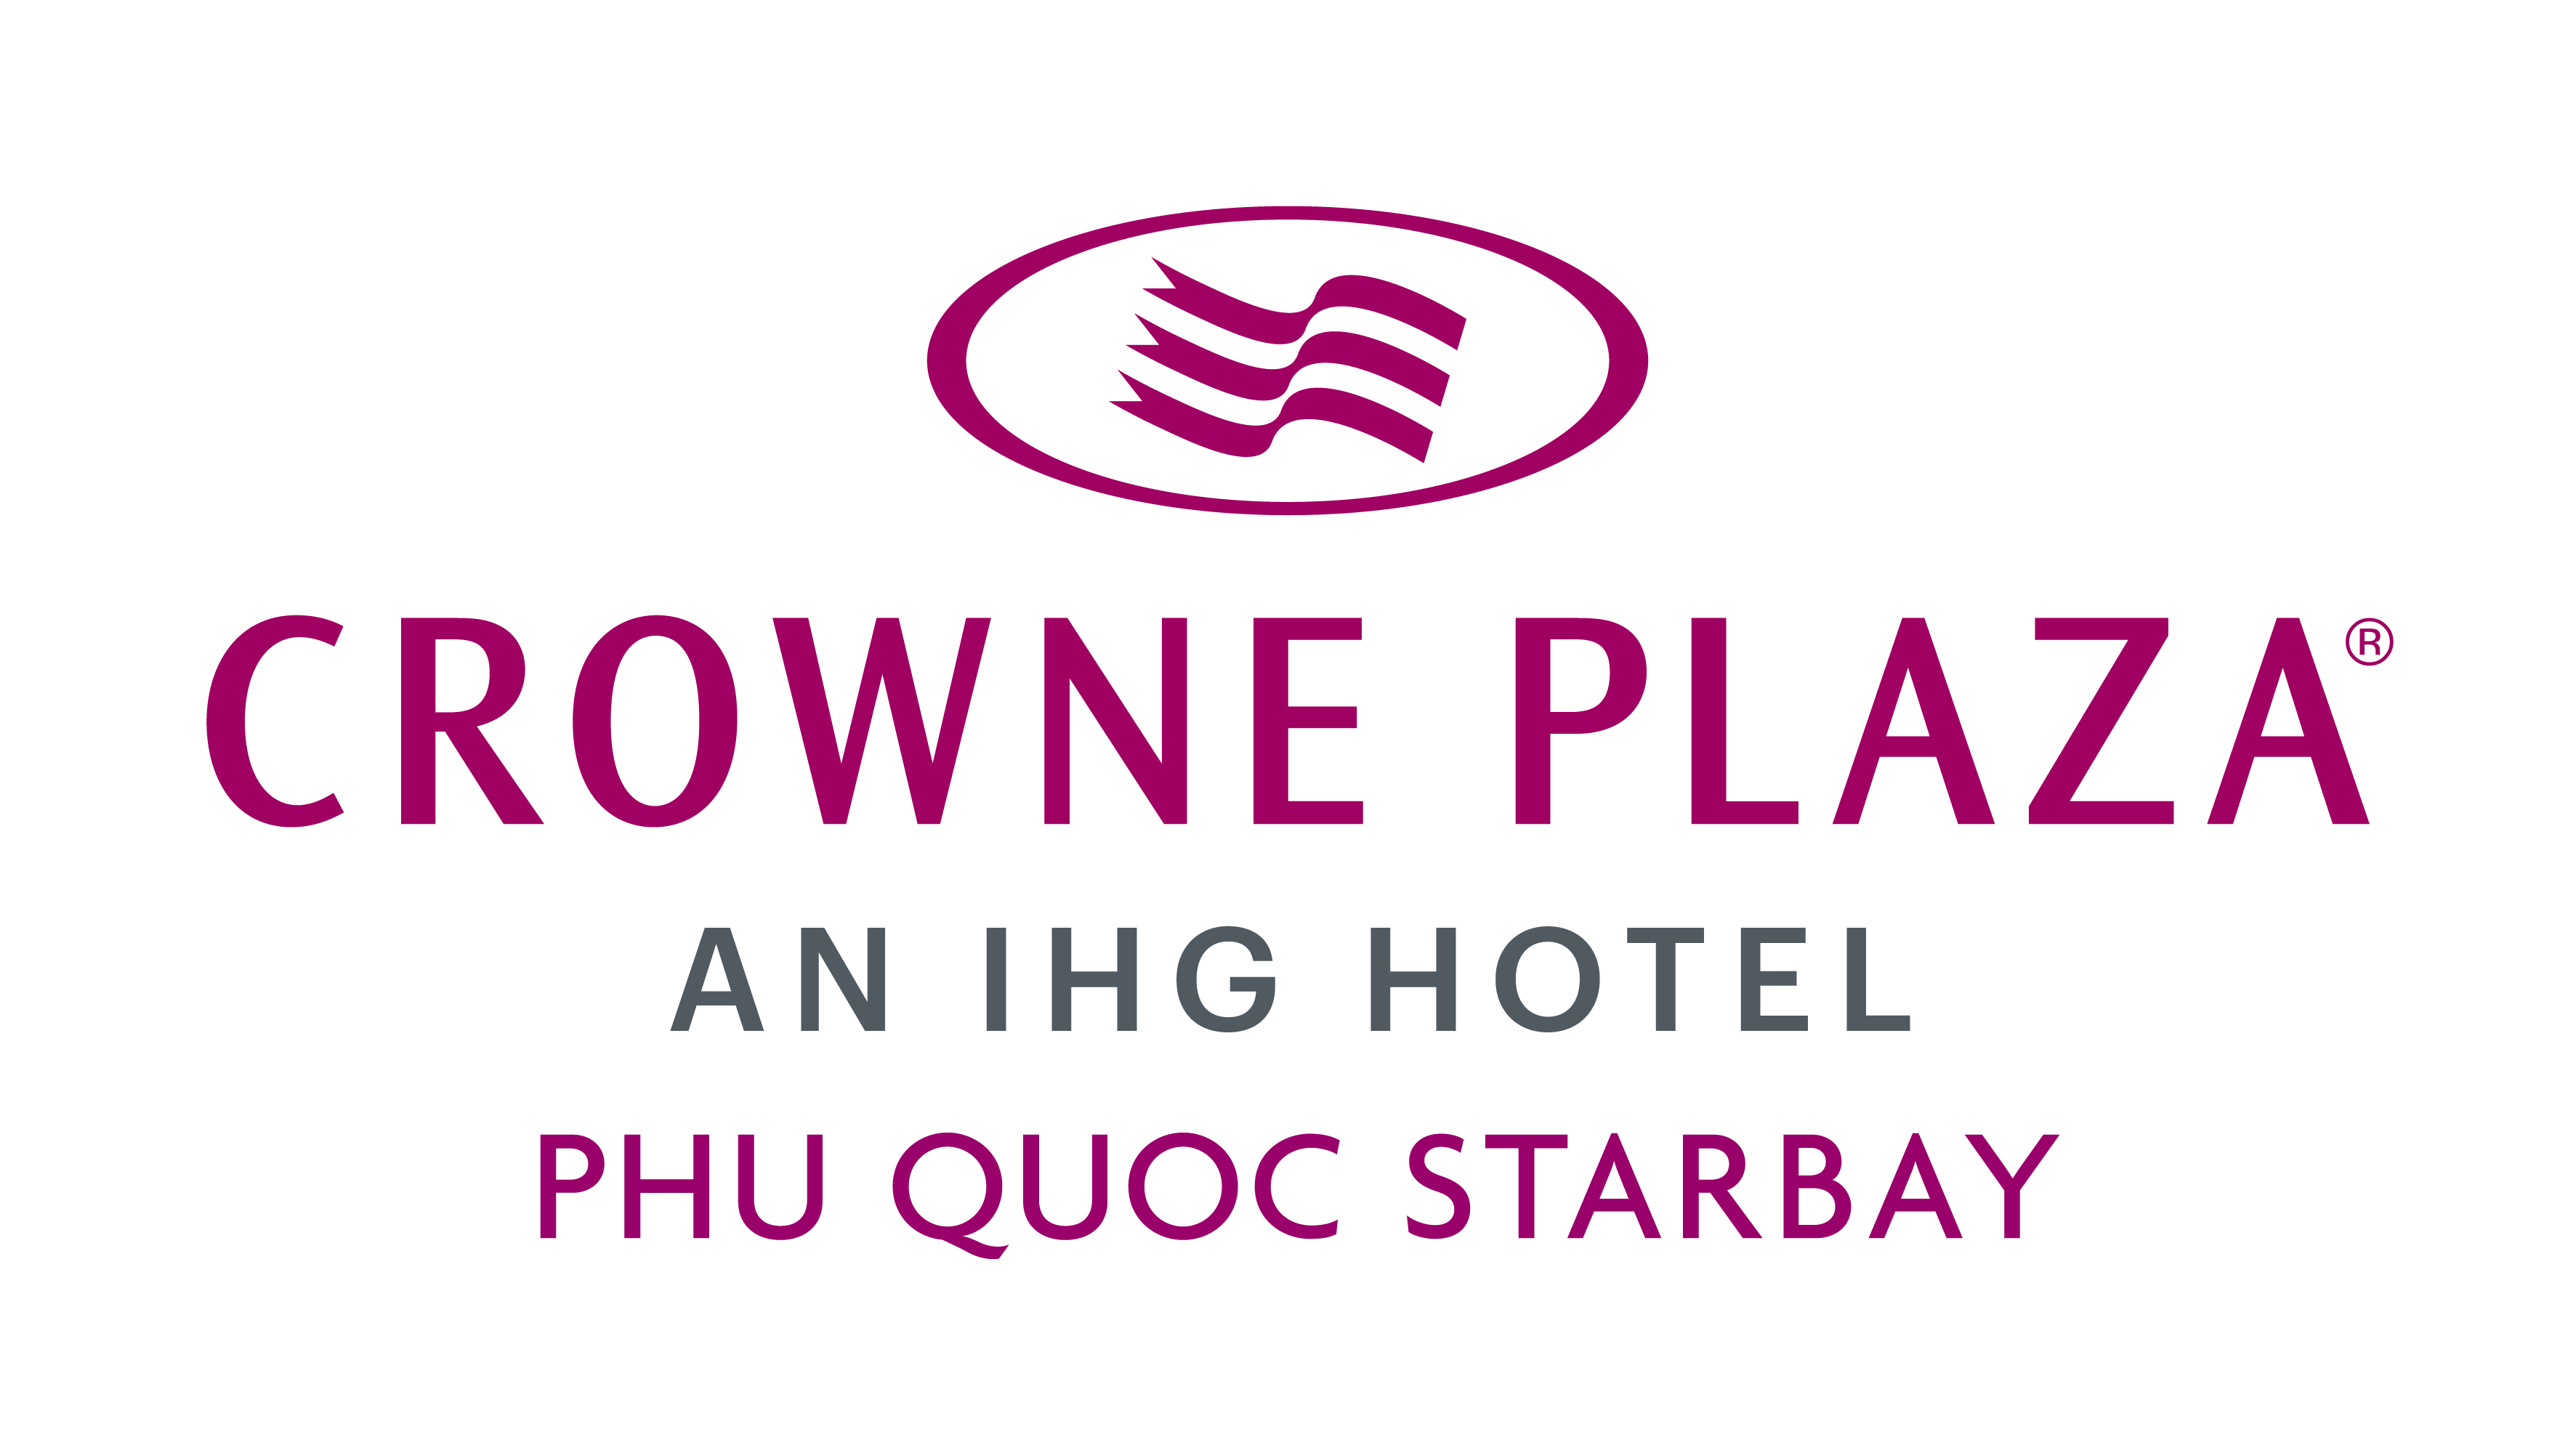 Crowne Plaza Phu Quoc Starbay